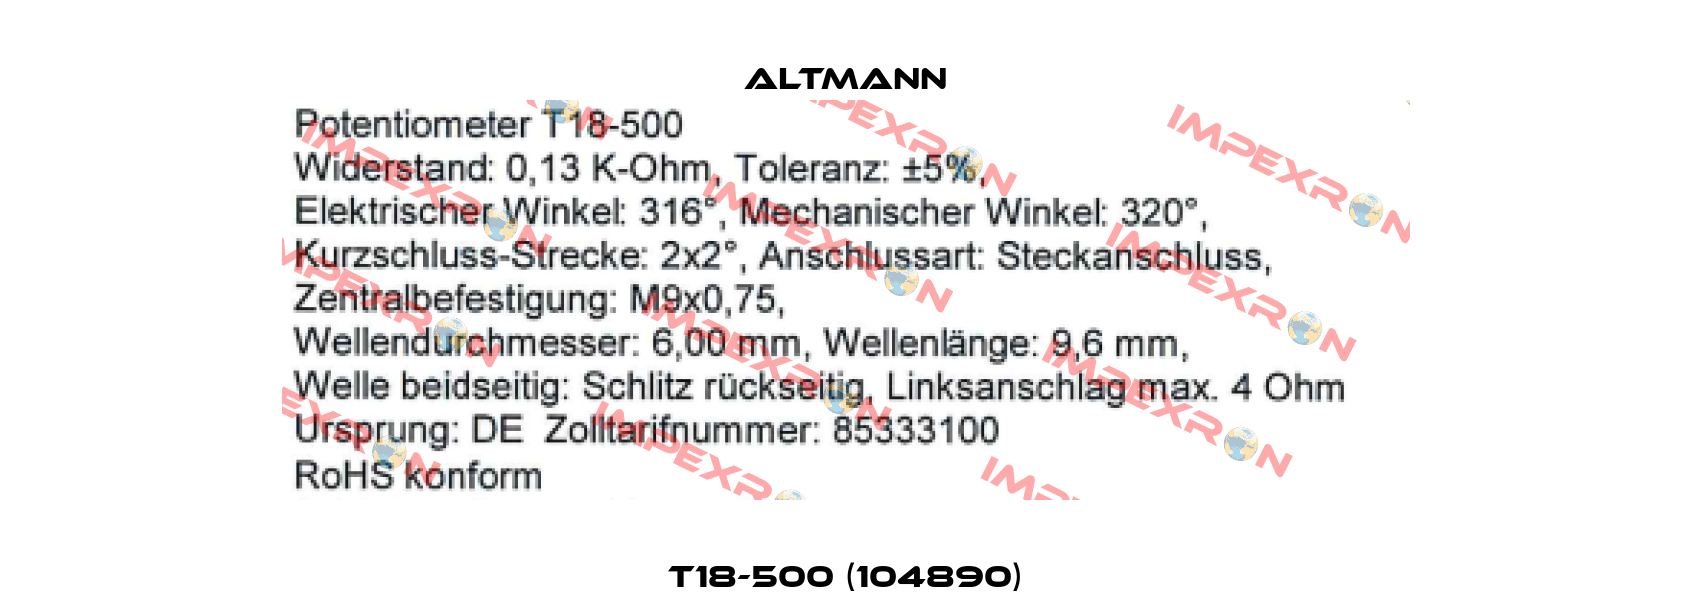 T18-500 (104890) ALTMANN